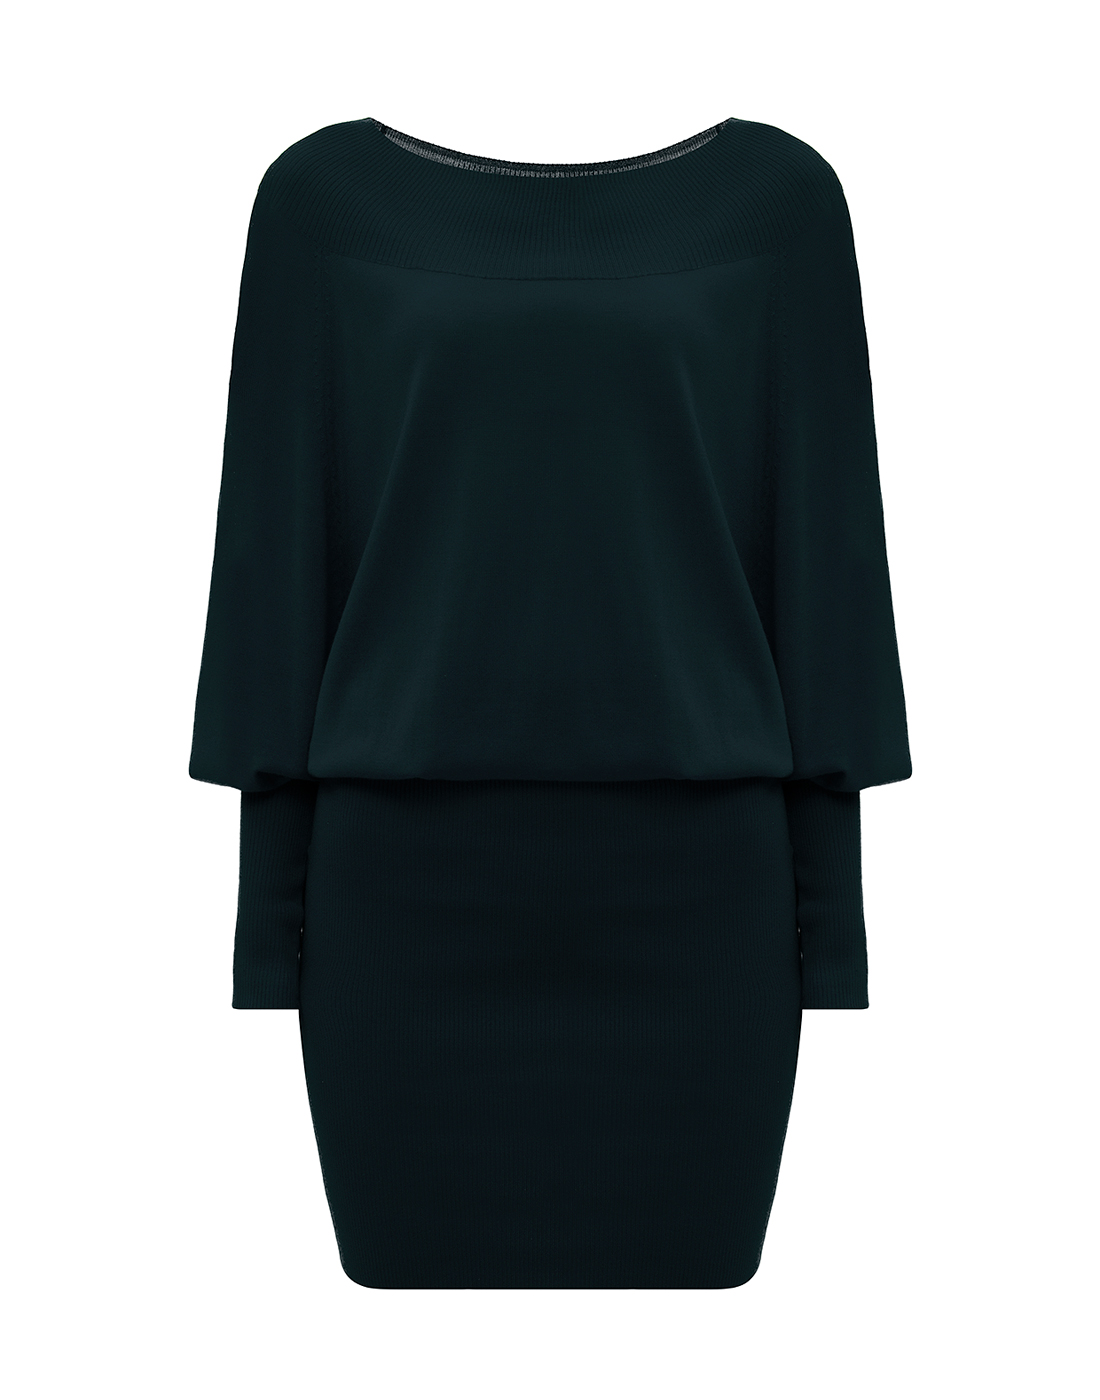 Женское темно-зеленое шерстяное платье P.A.R.O.S.H. SD550630 DARK GREEN-1